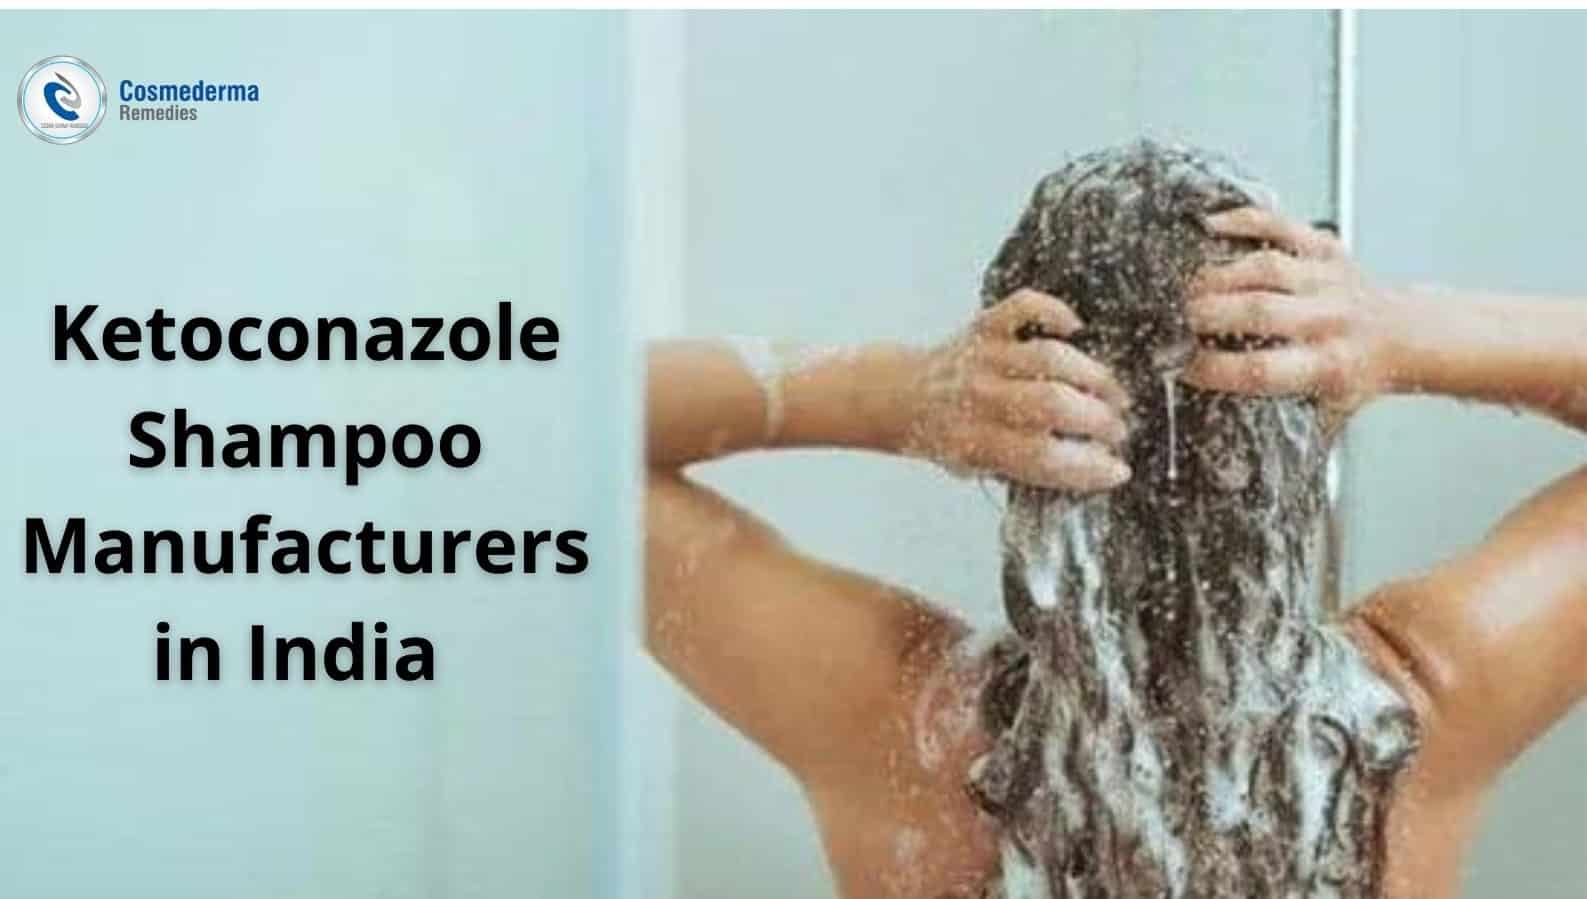 Ketoconazole Shampoo Manufacturers in India